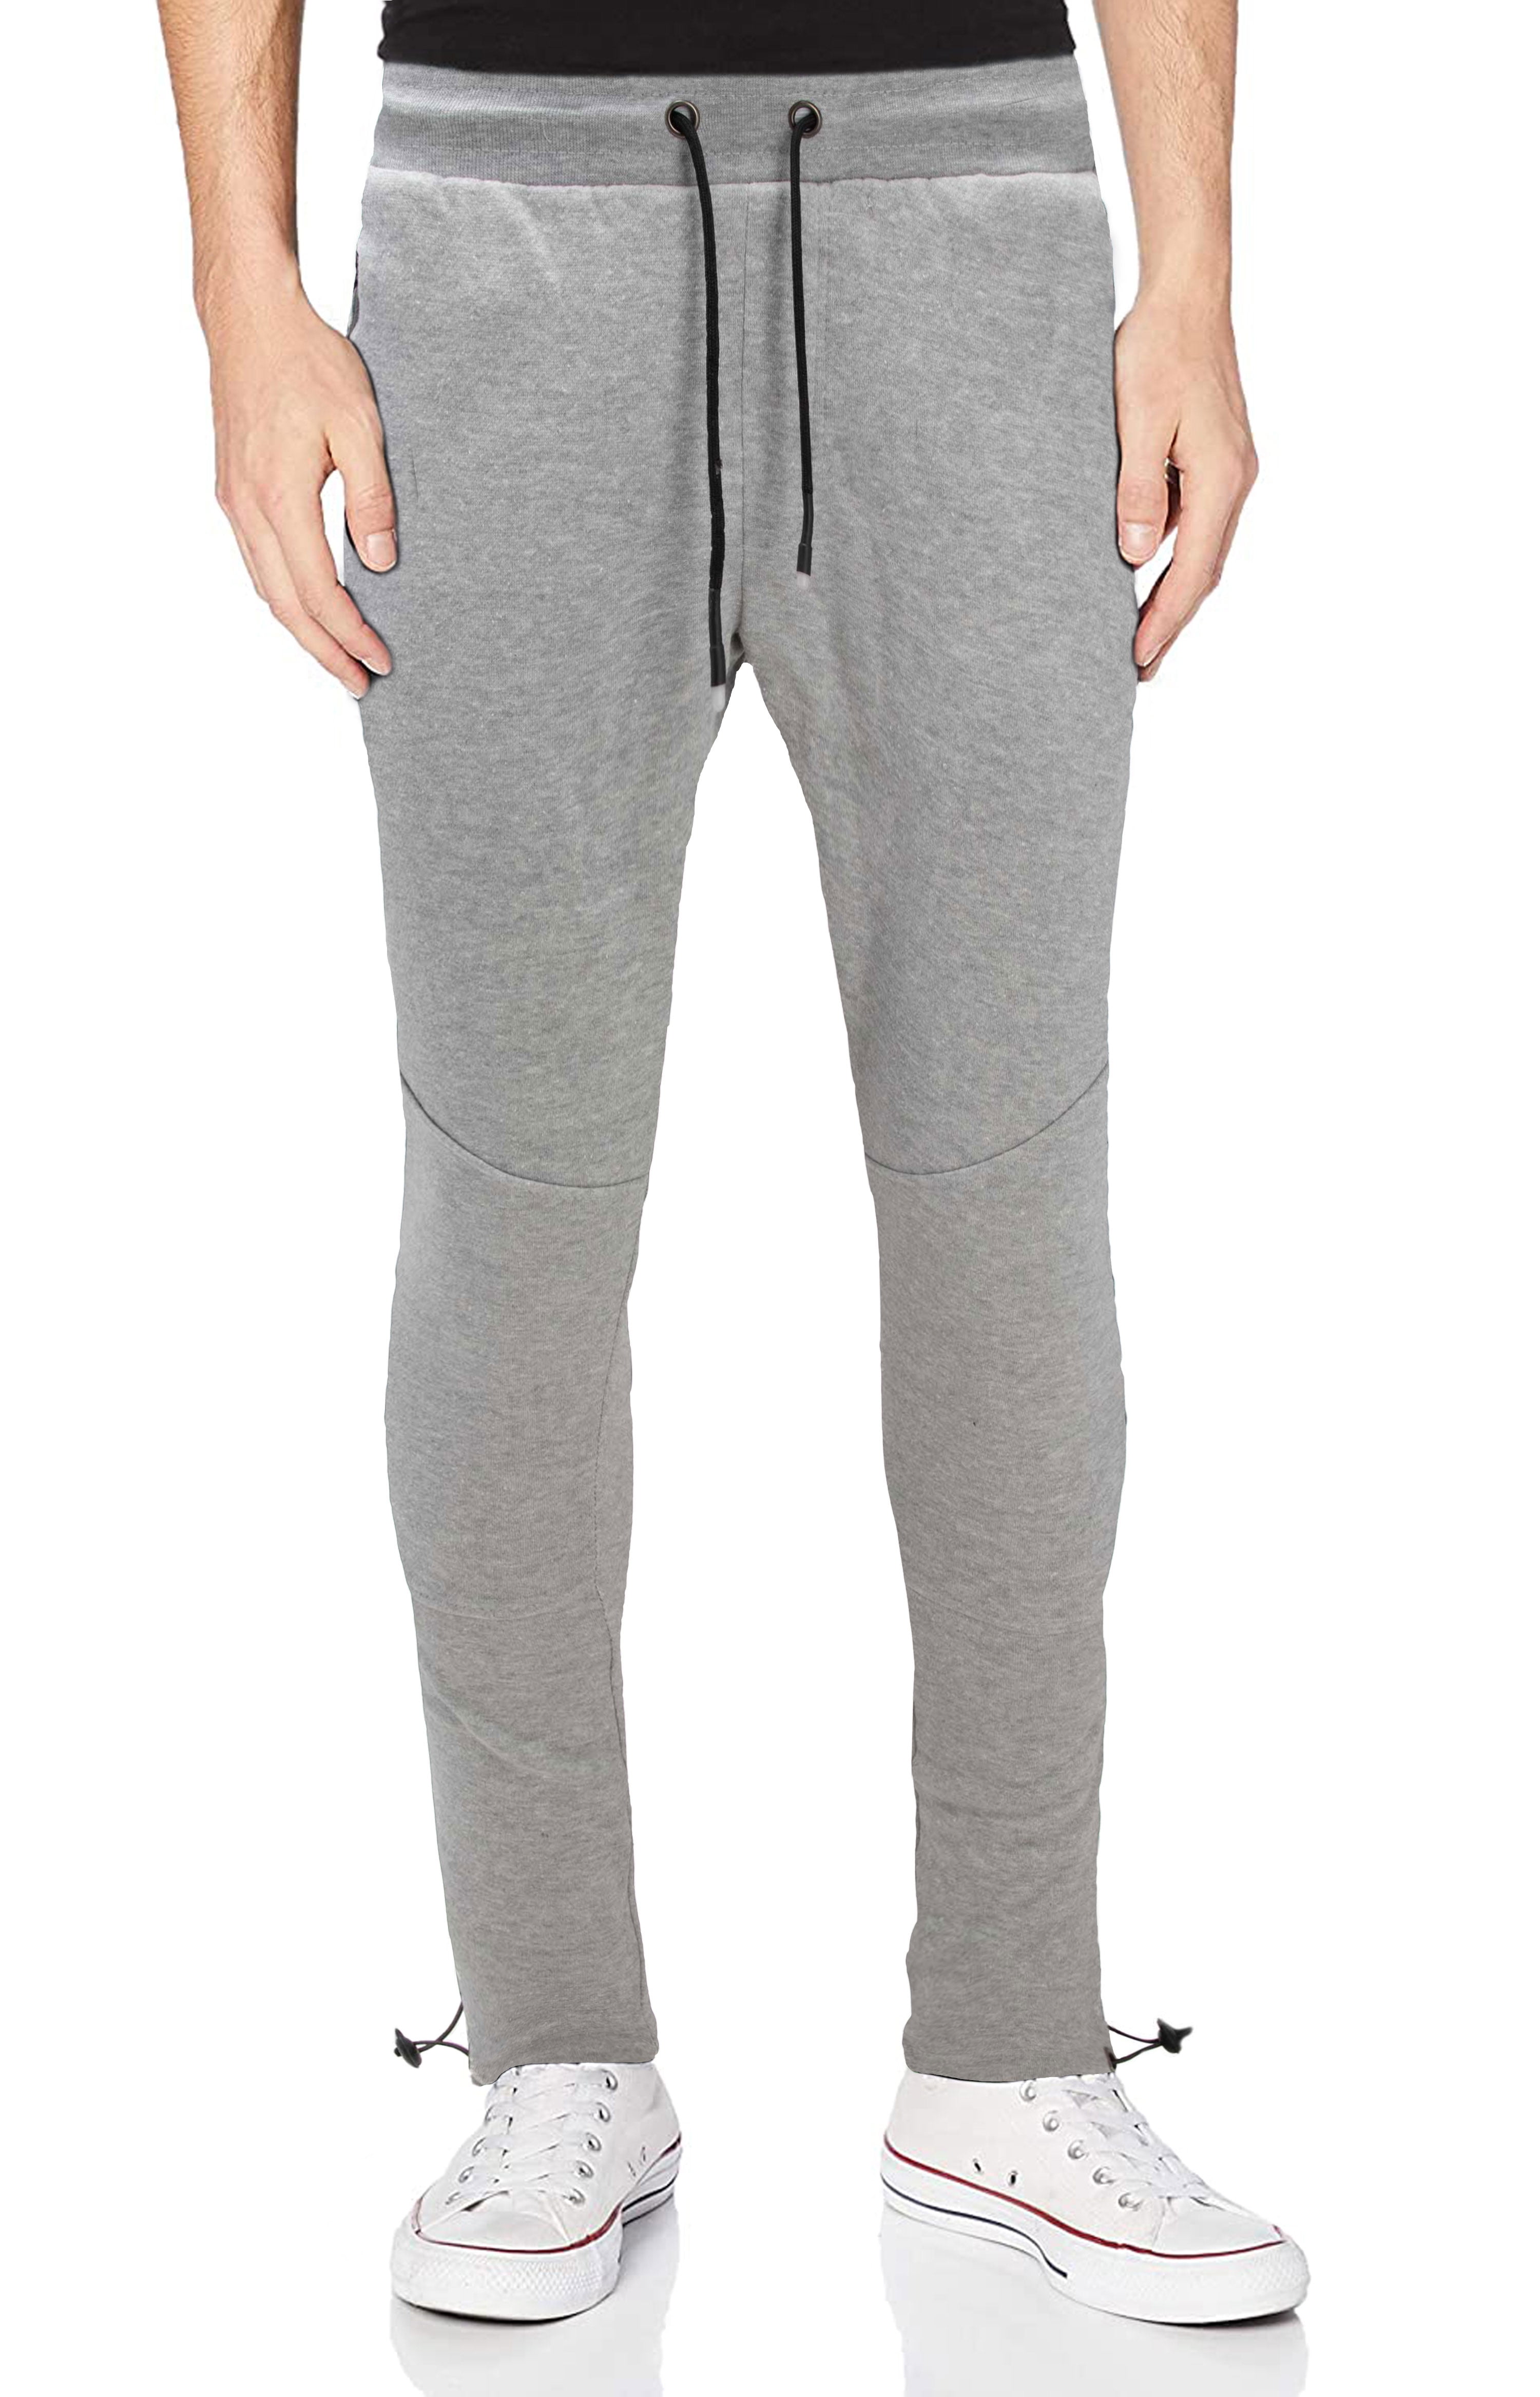 X RAY Men's Active Fashion Jogger Fleece Pants, Zipper Pockets Workout  Sport Exercise Athletic Pants, Light Grey - Fleece Jogger, XX-Large 